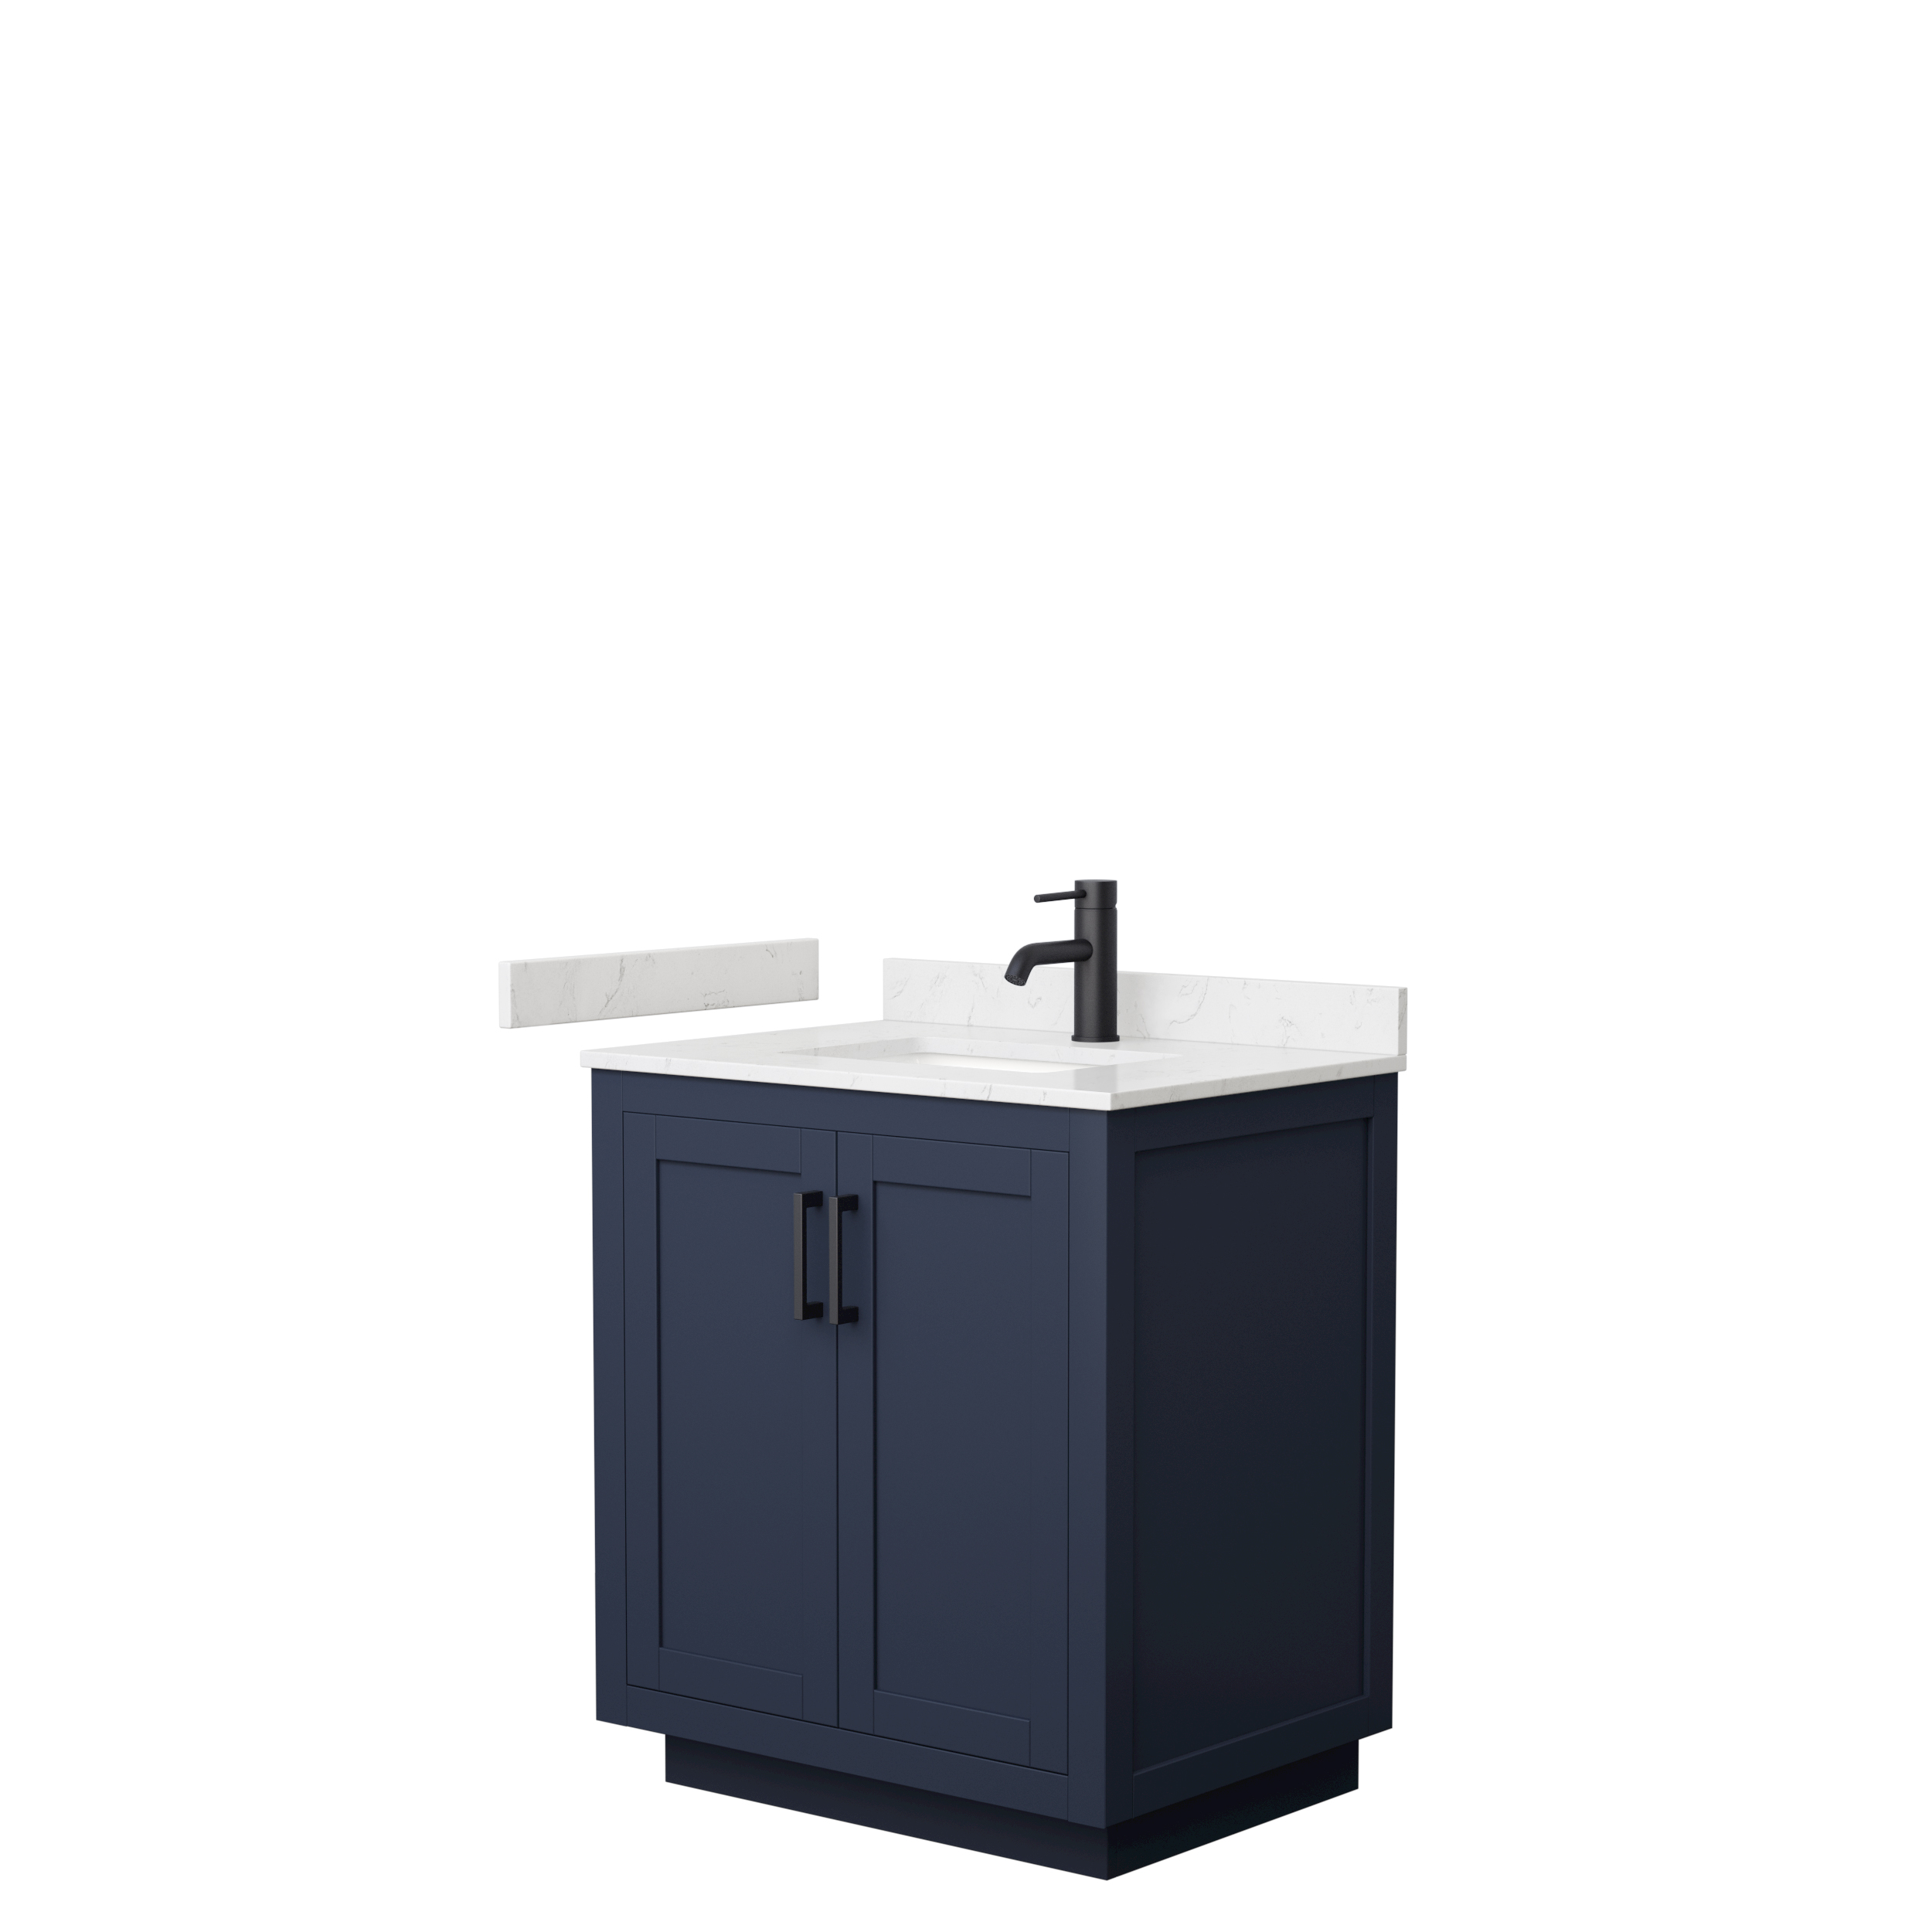 30" Single Bathroom Vanity in Dark Blue, Light-Vein Carrara Cultured Marble Countertop, Undermount Square Sink, Matte Black Trim